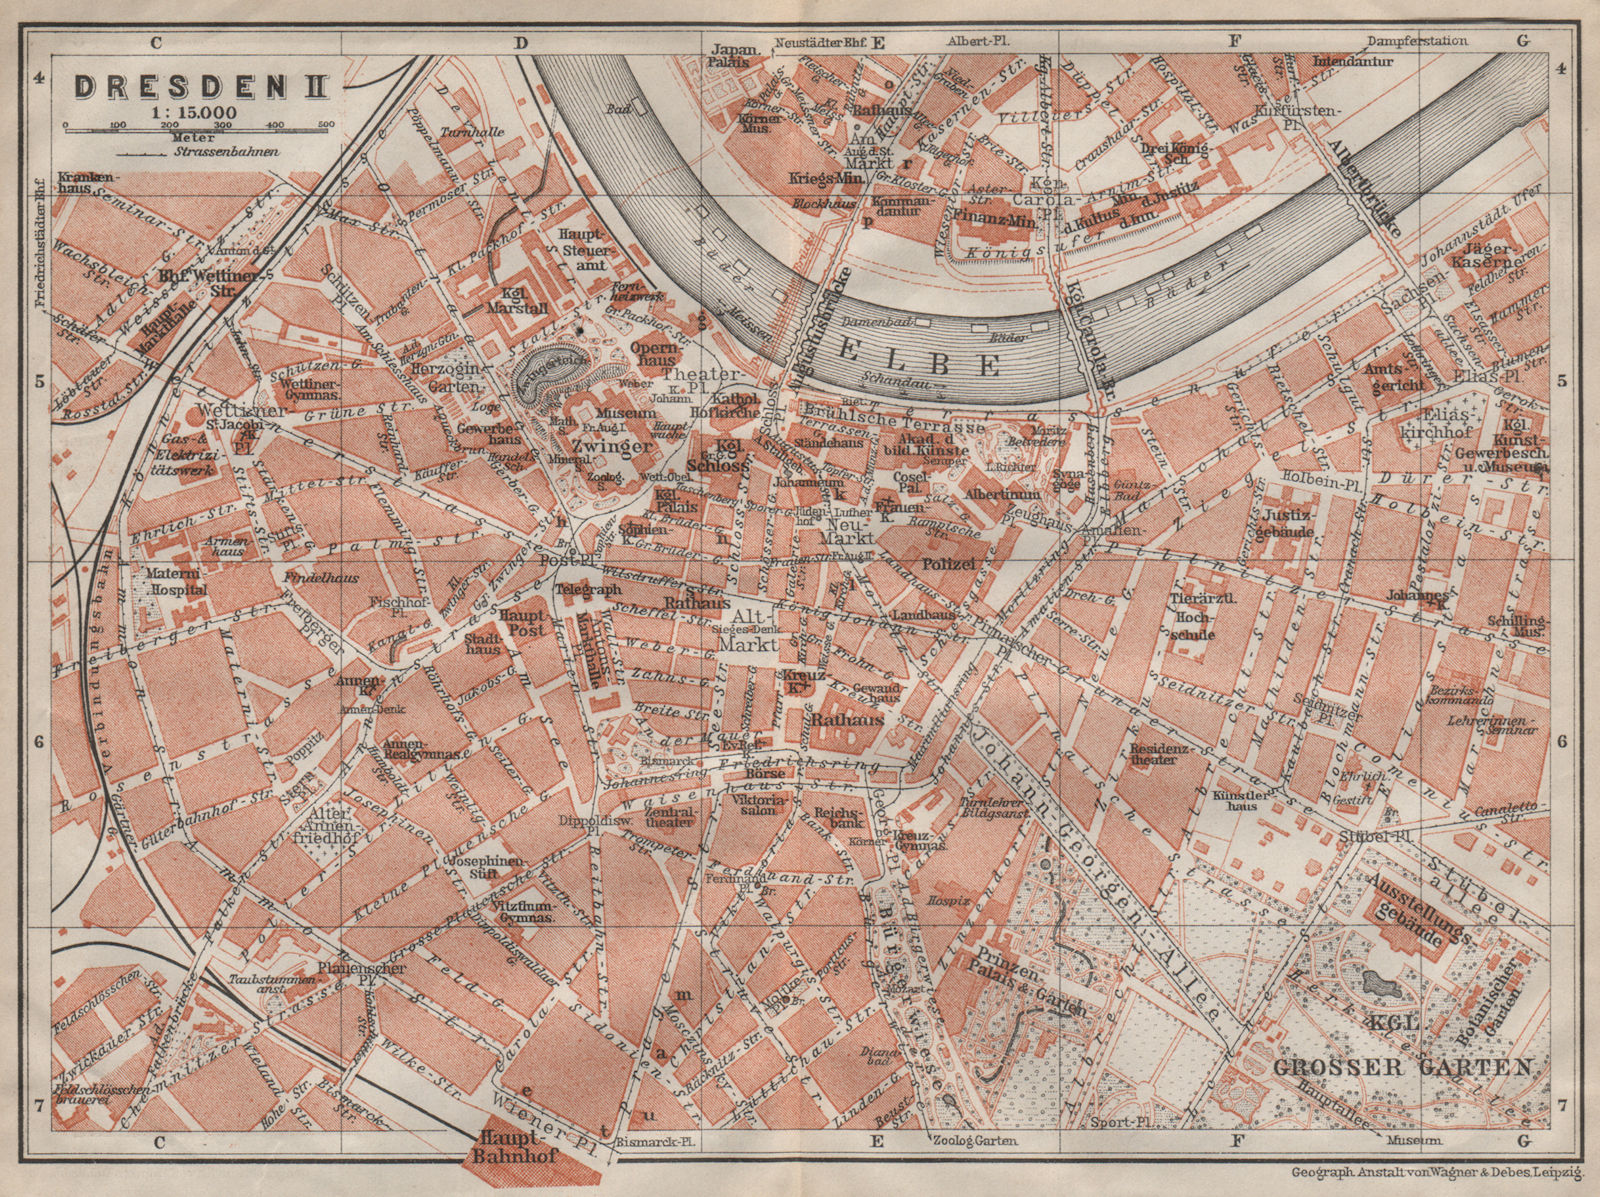 Associate Product DRESDEN antique town city stadtplan II. Innere Stadt karte. BAEDEKER 1910 map